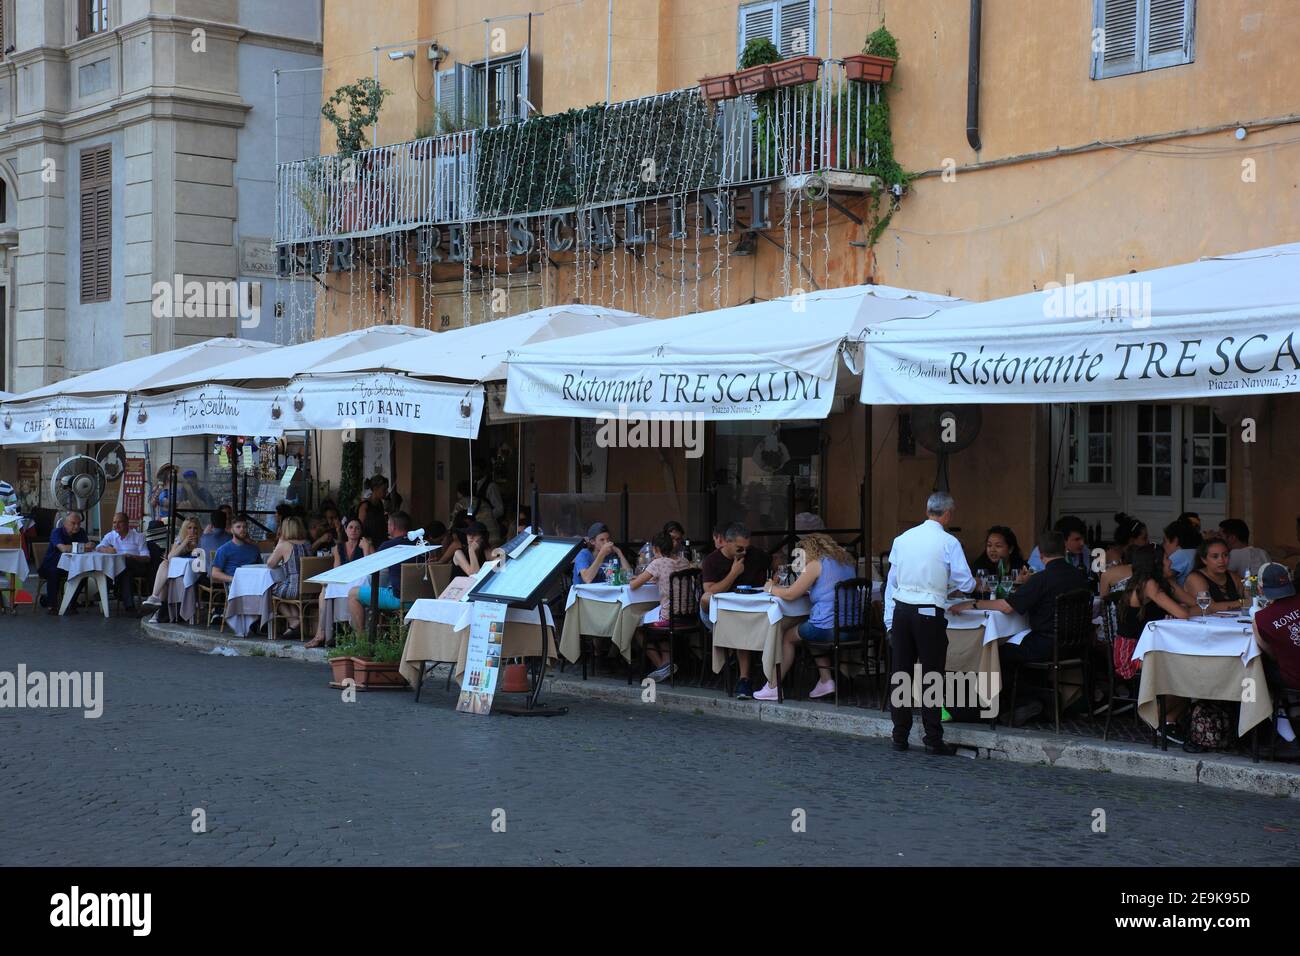 Caffè di strada nel centro storico di Roma, Italia / Straßenkaffee in der Altstadt von Rom, Italien Foto Stock